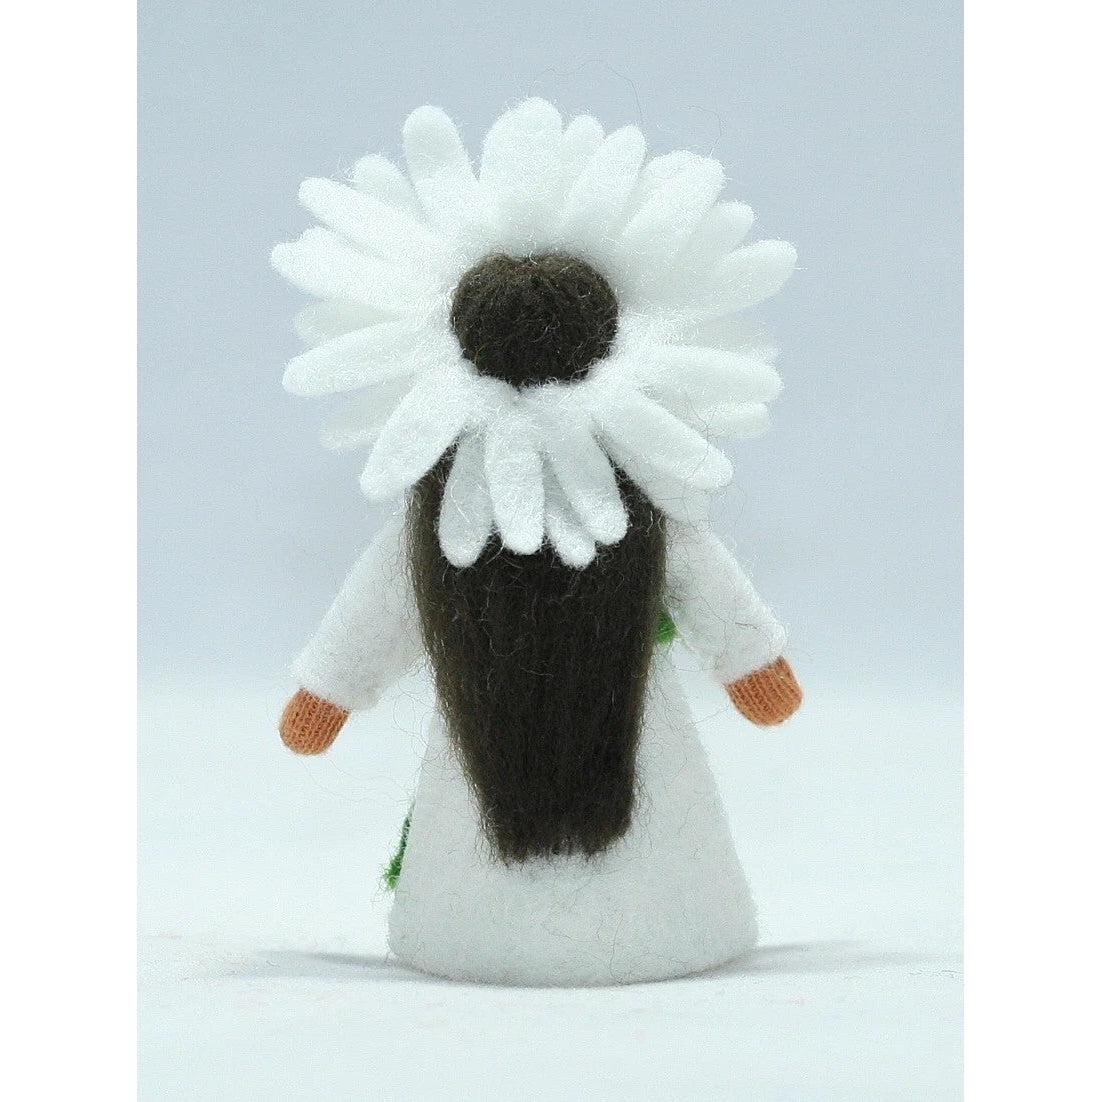 Daisy Doll with Flower on Head - Medium Skin